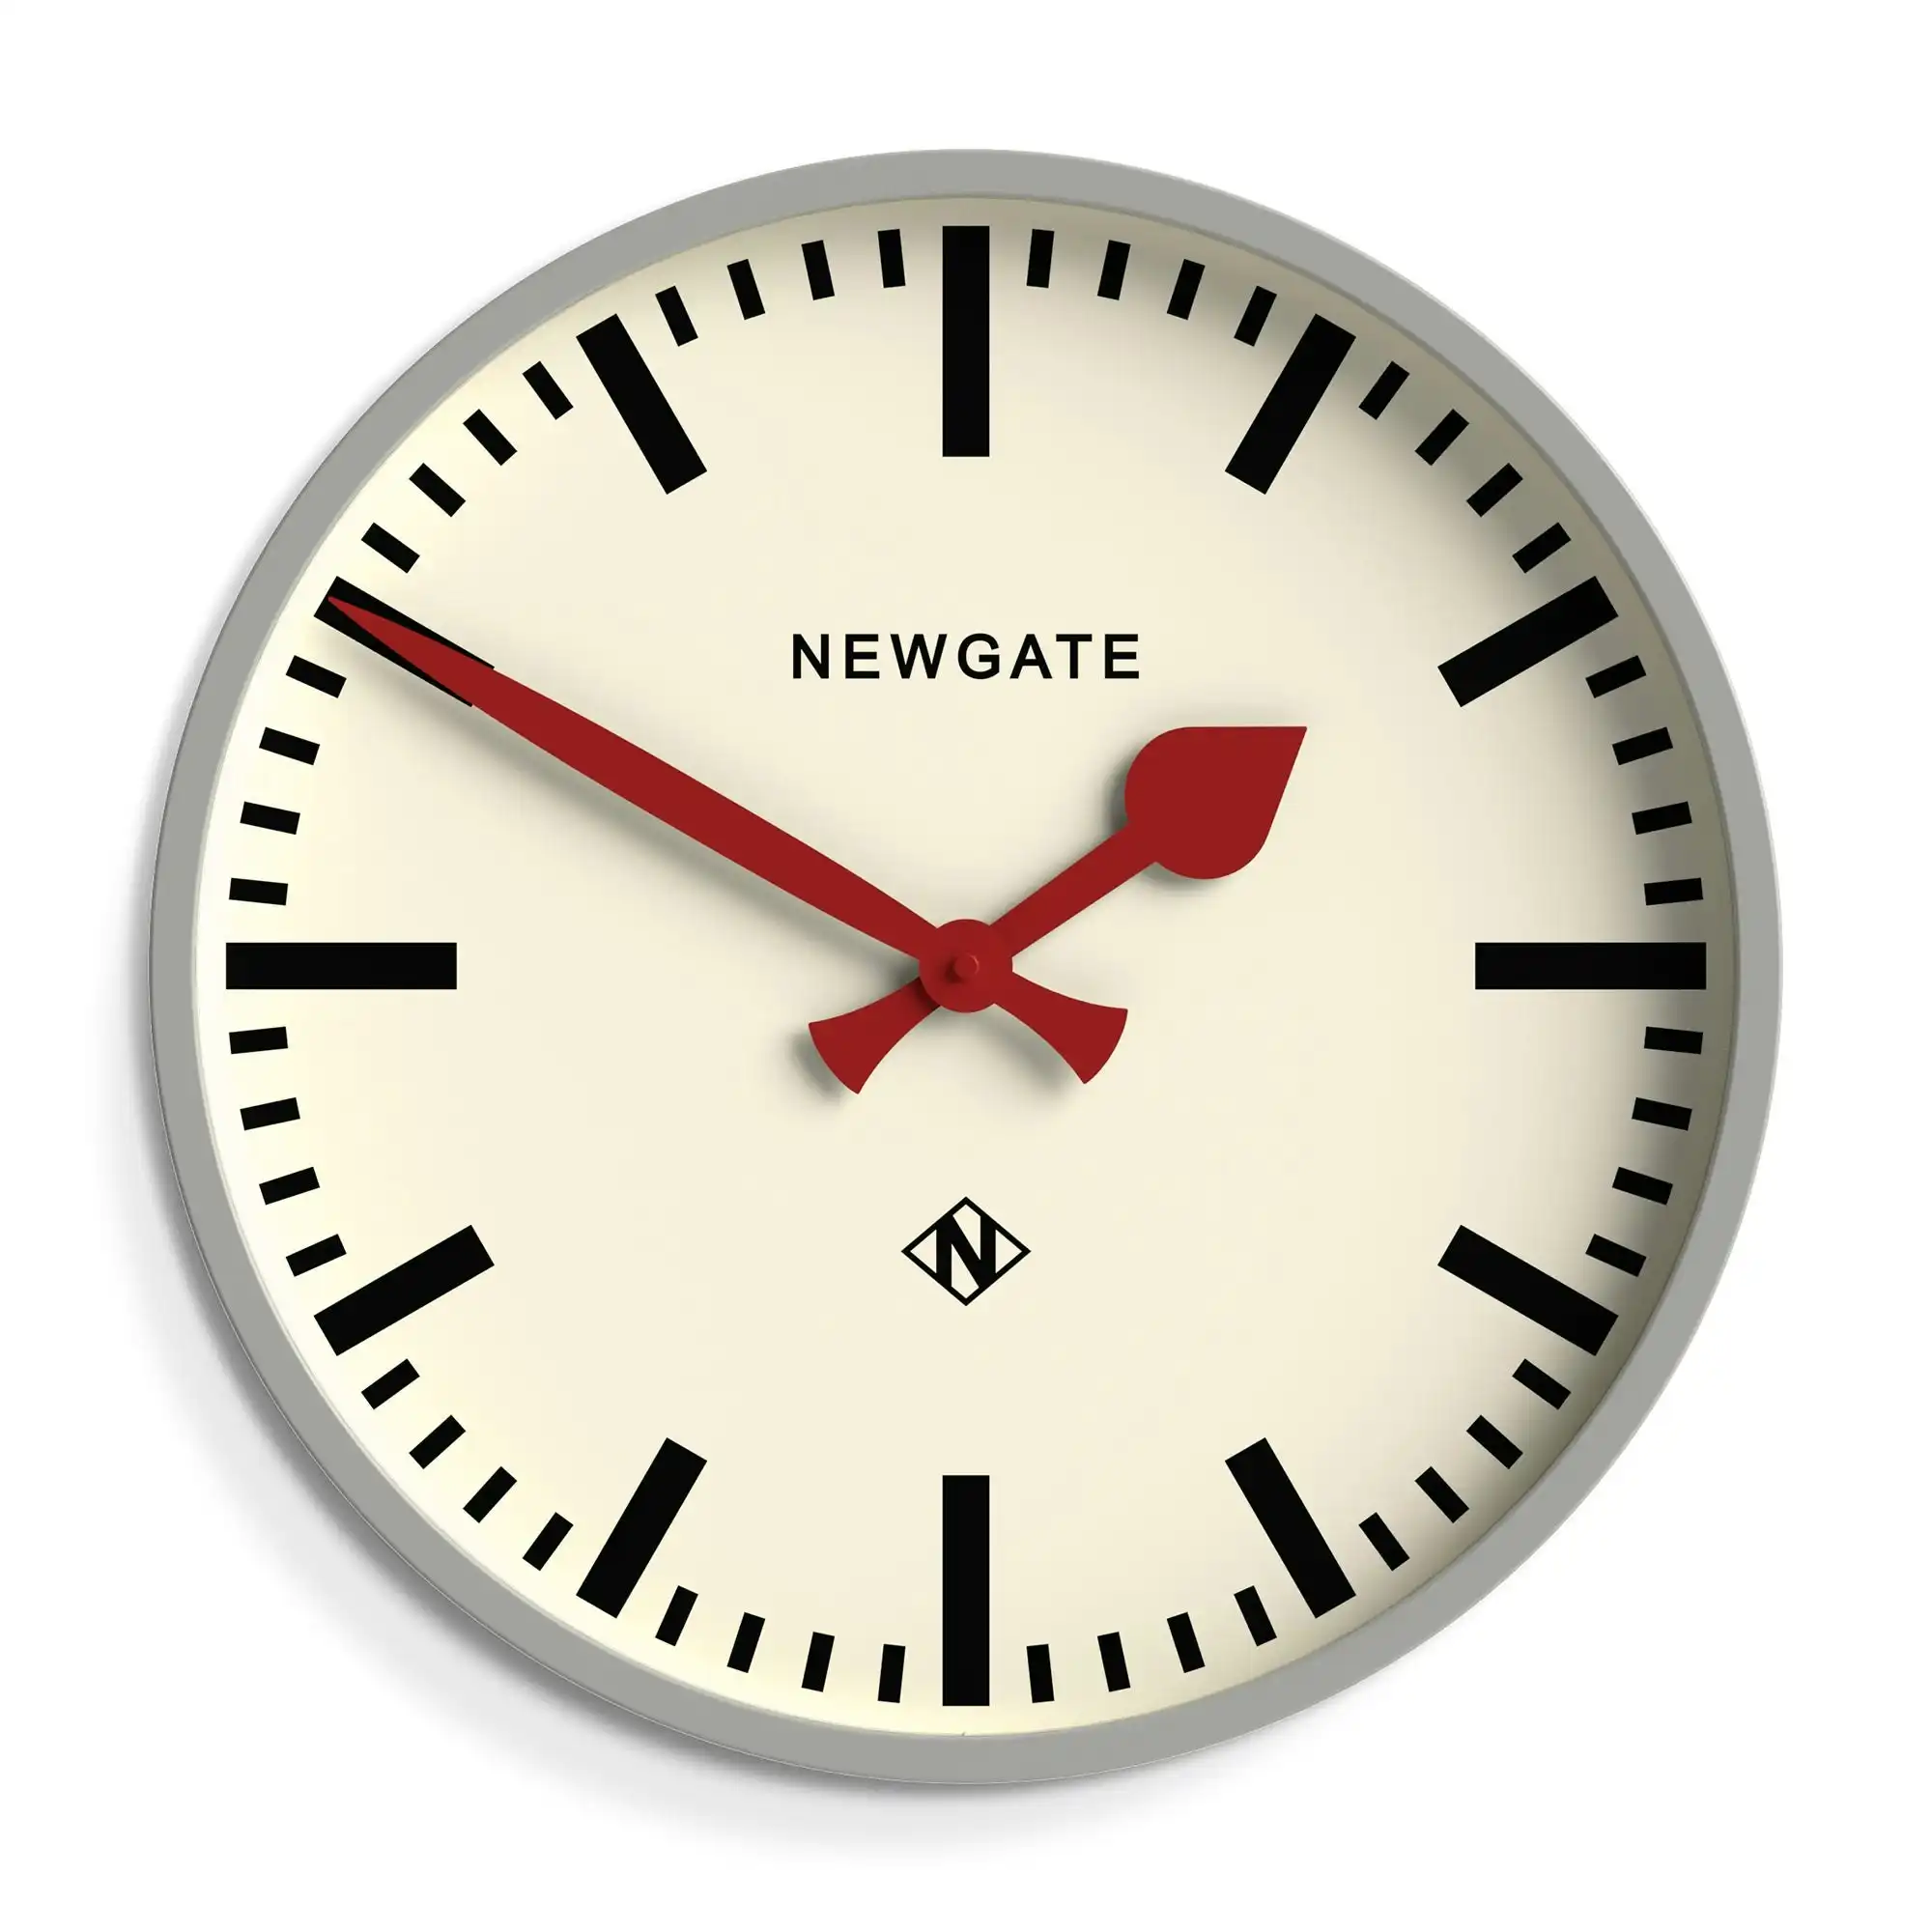 Newgate Universal Wall Clock Railway Dial Grey